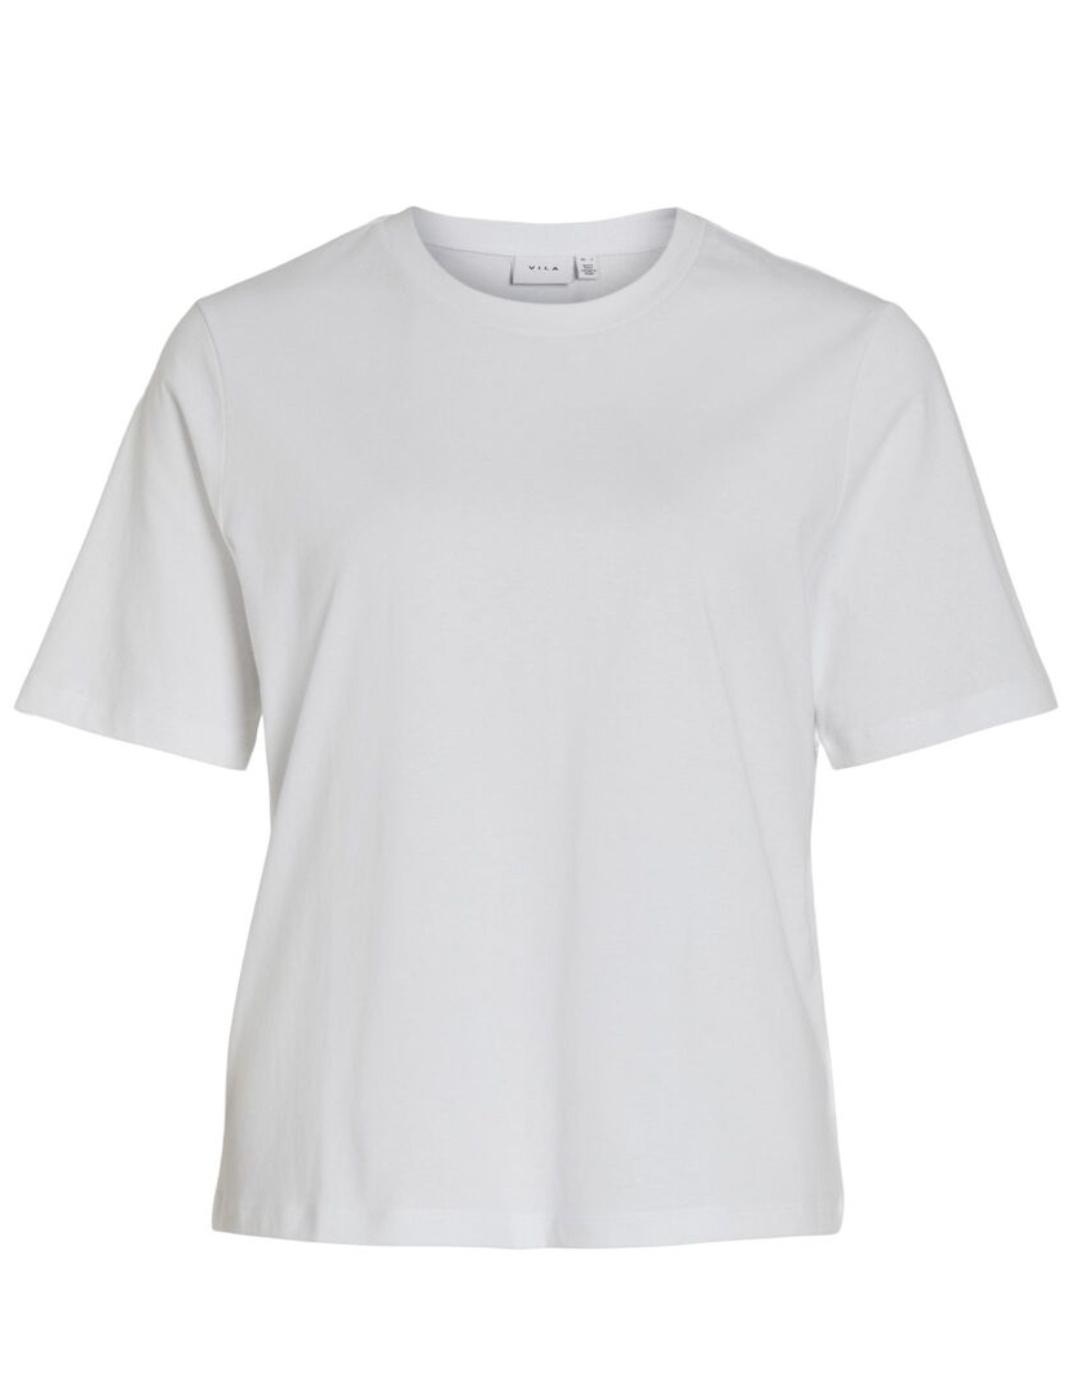 Camiseta Vila Darlene blanco  Regularmanga corta para mujer